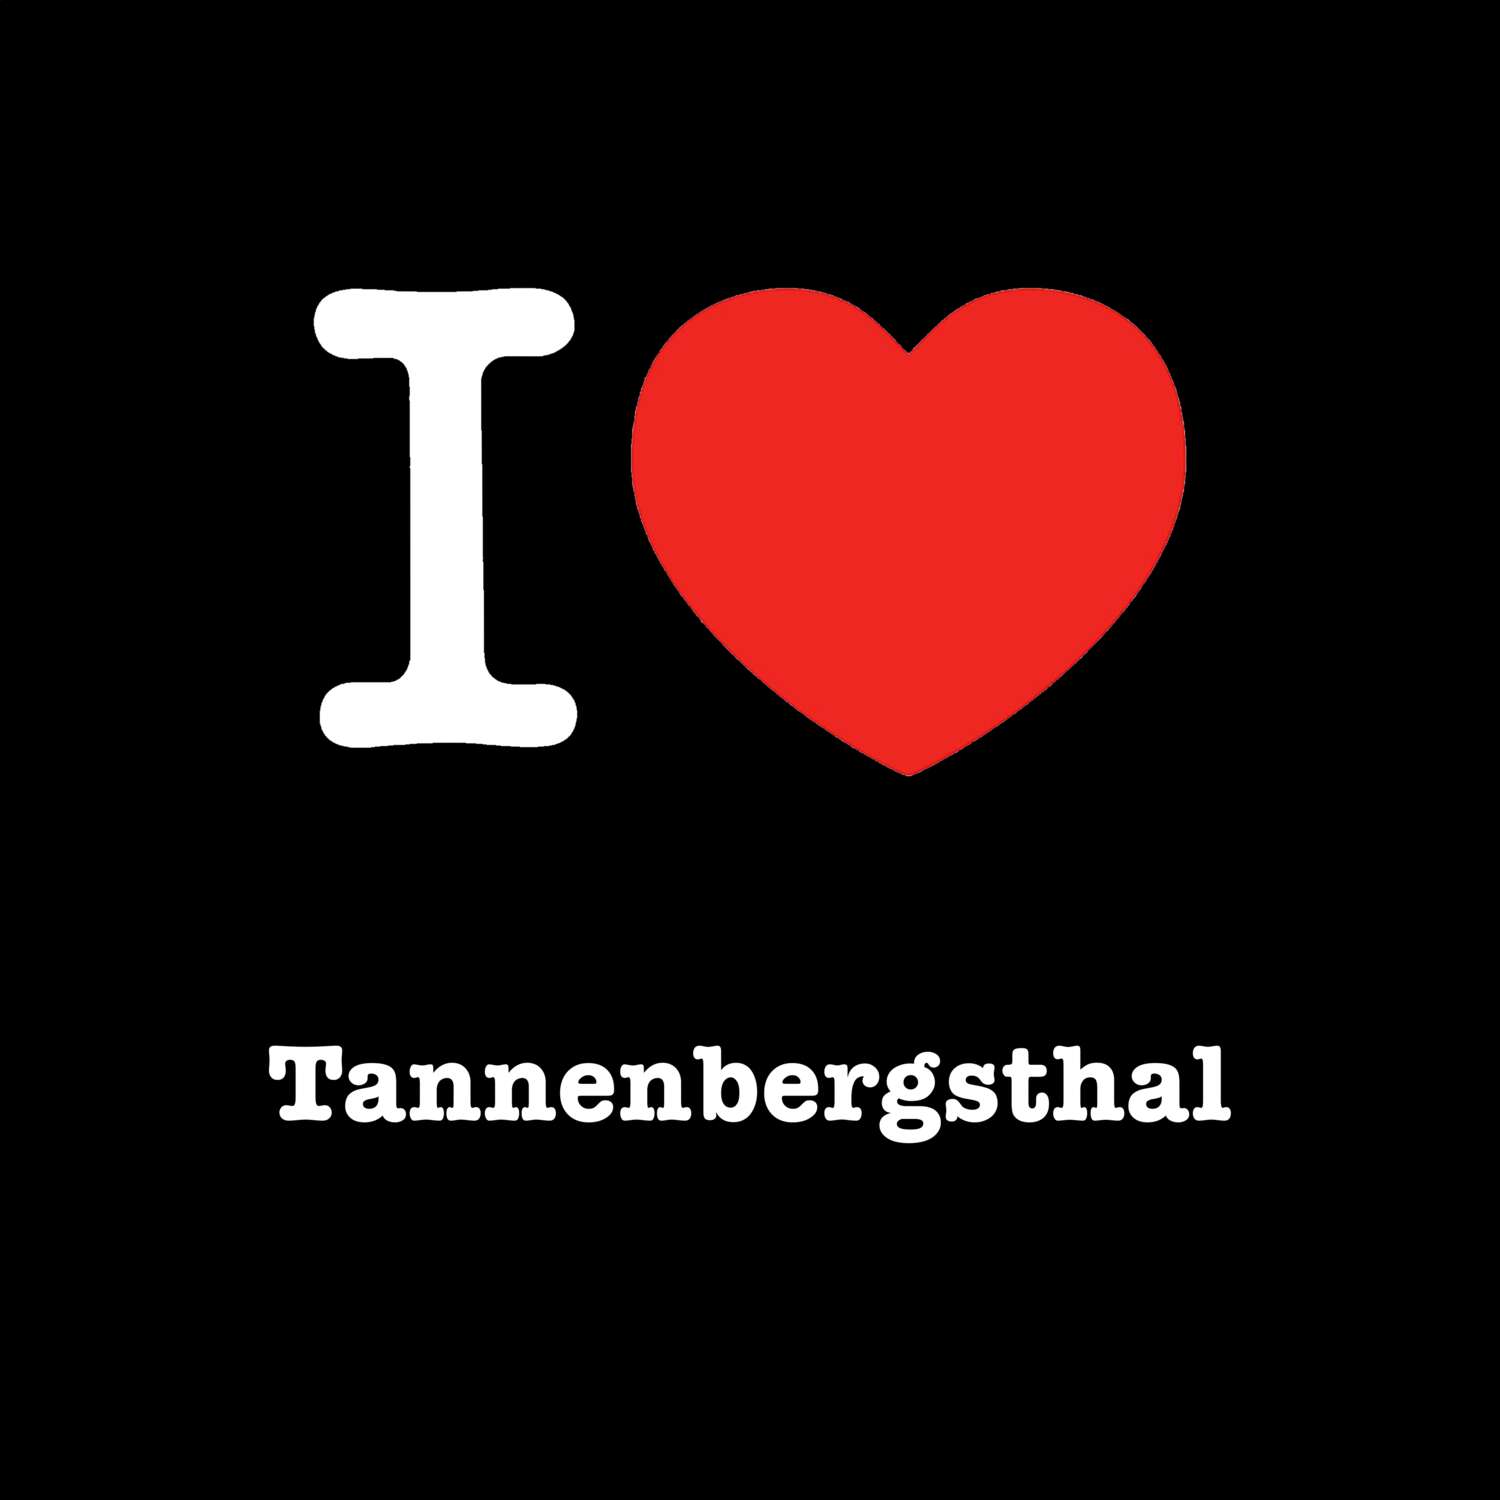 Tannenbergsthal T-Shirt »I love«